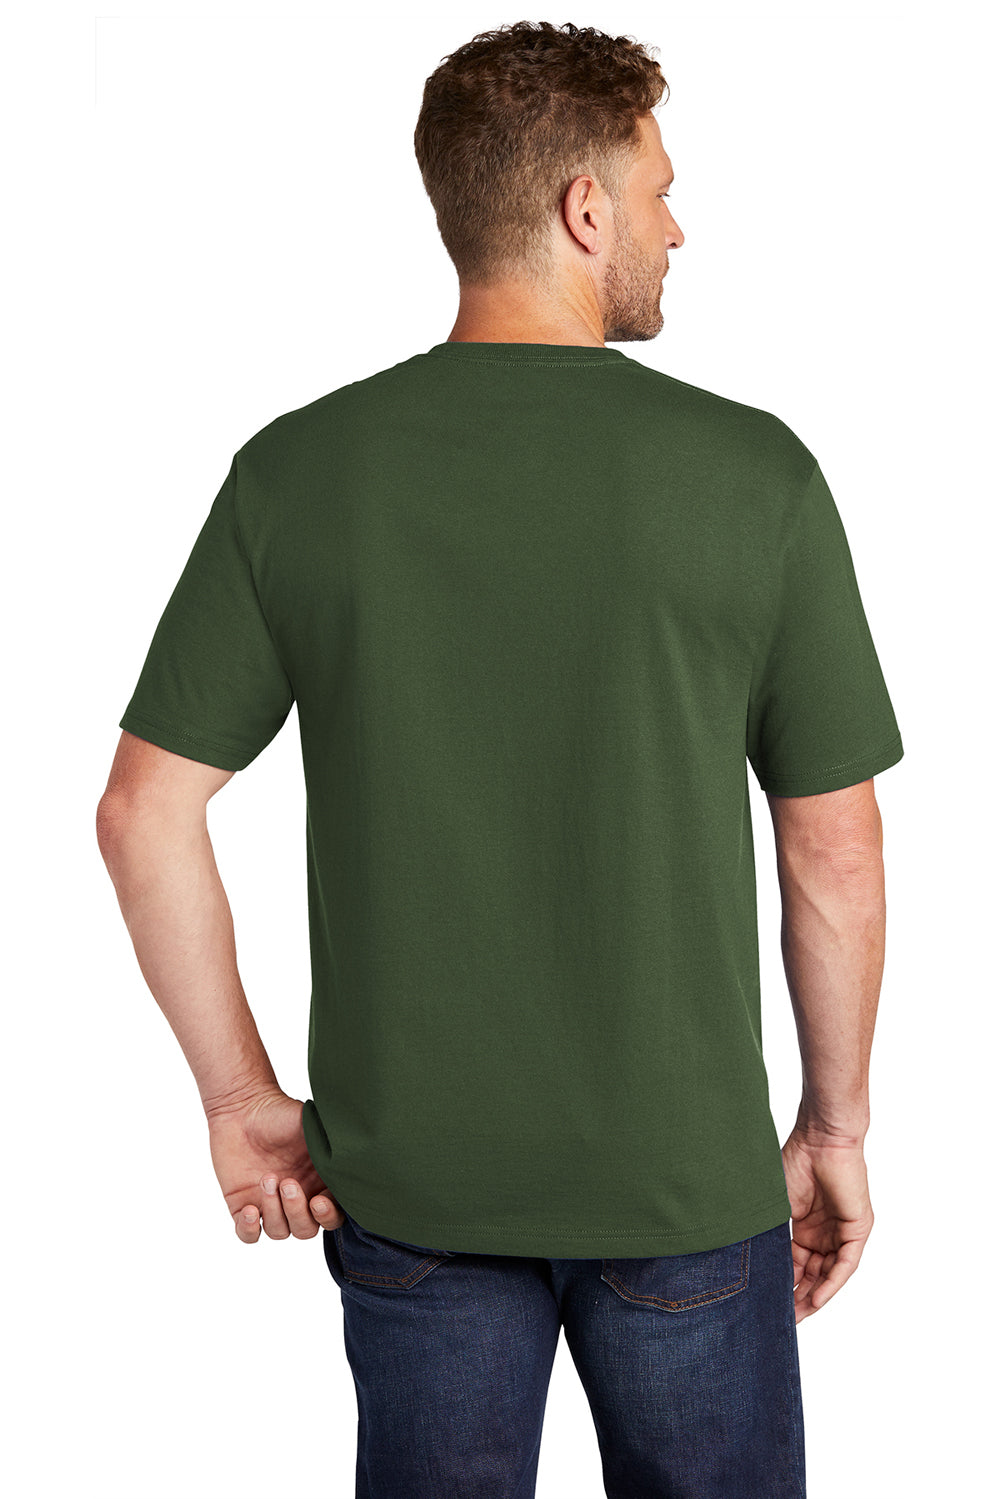 CornerStone Mens Short Sleeve Crewneck T-Shirt w/ Pocket Dark Green Side